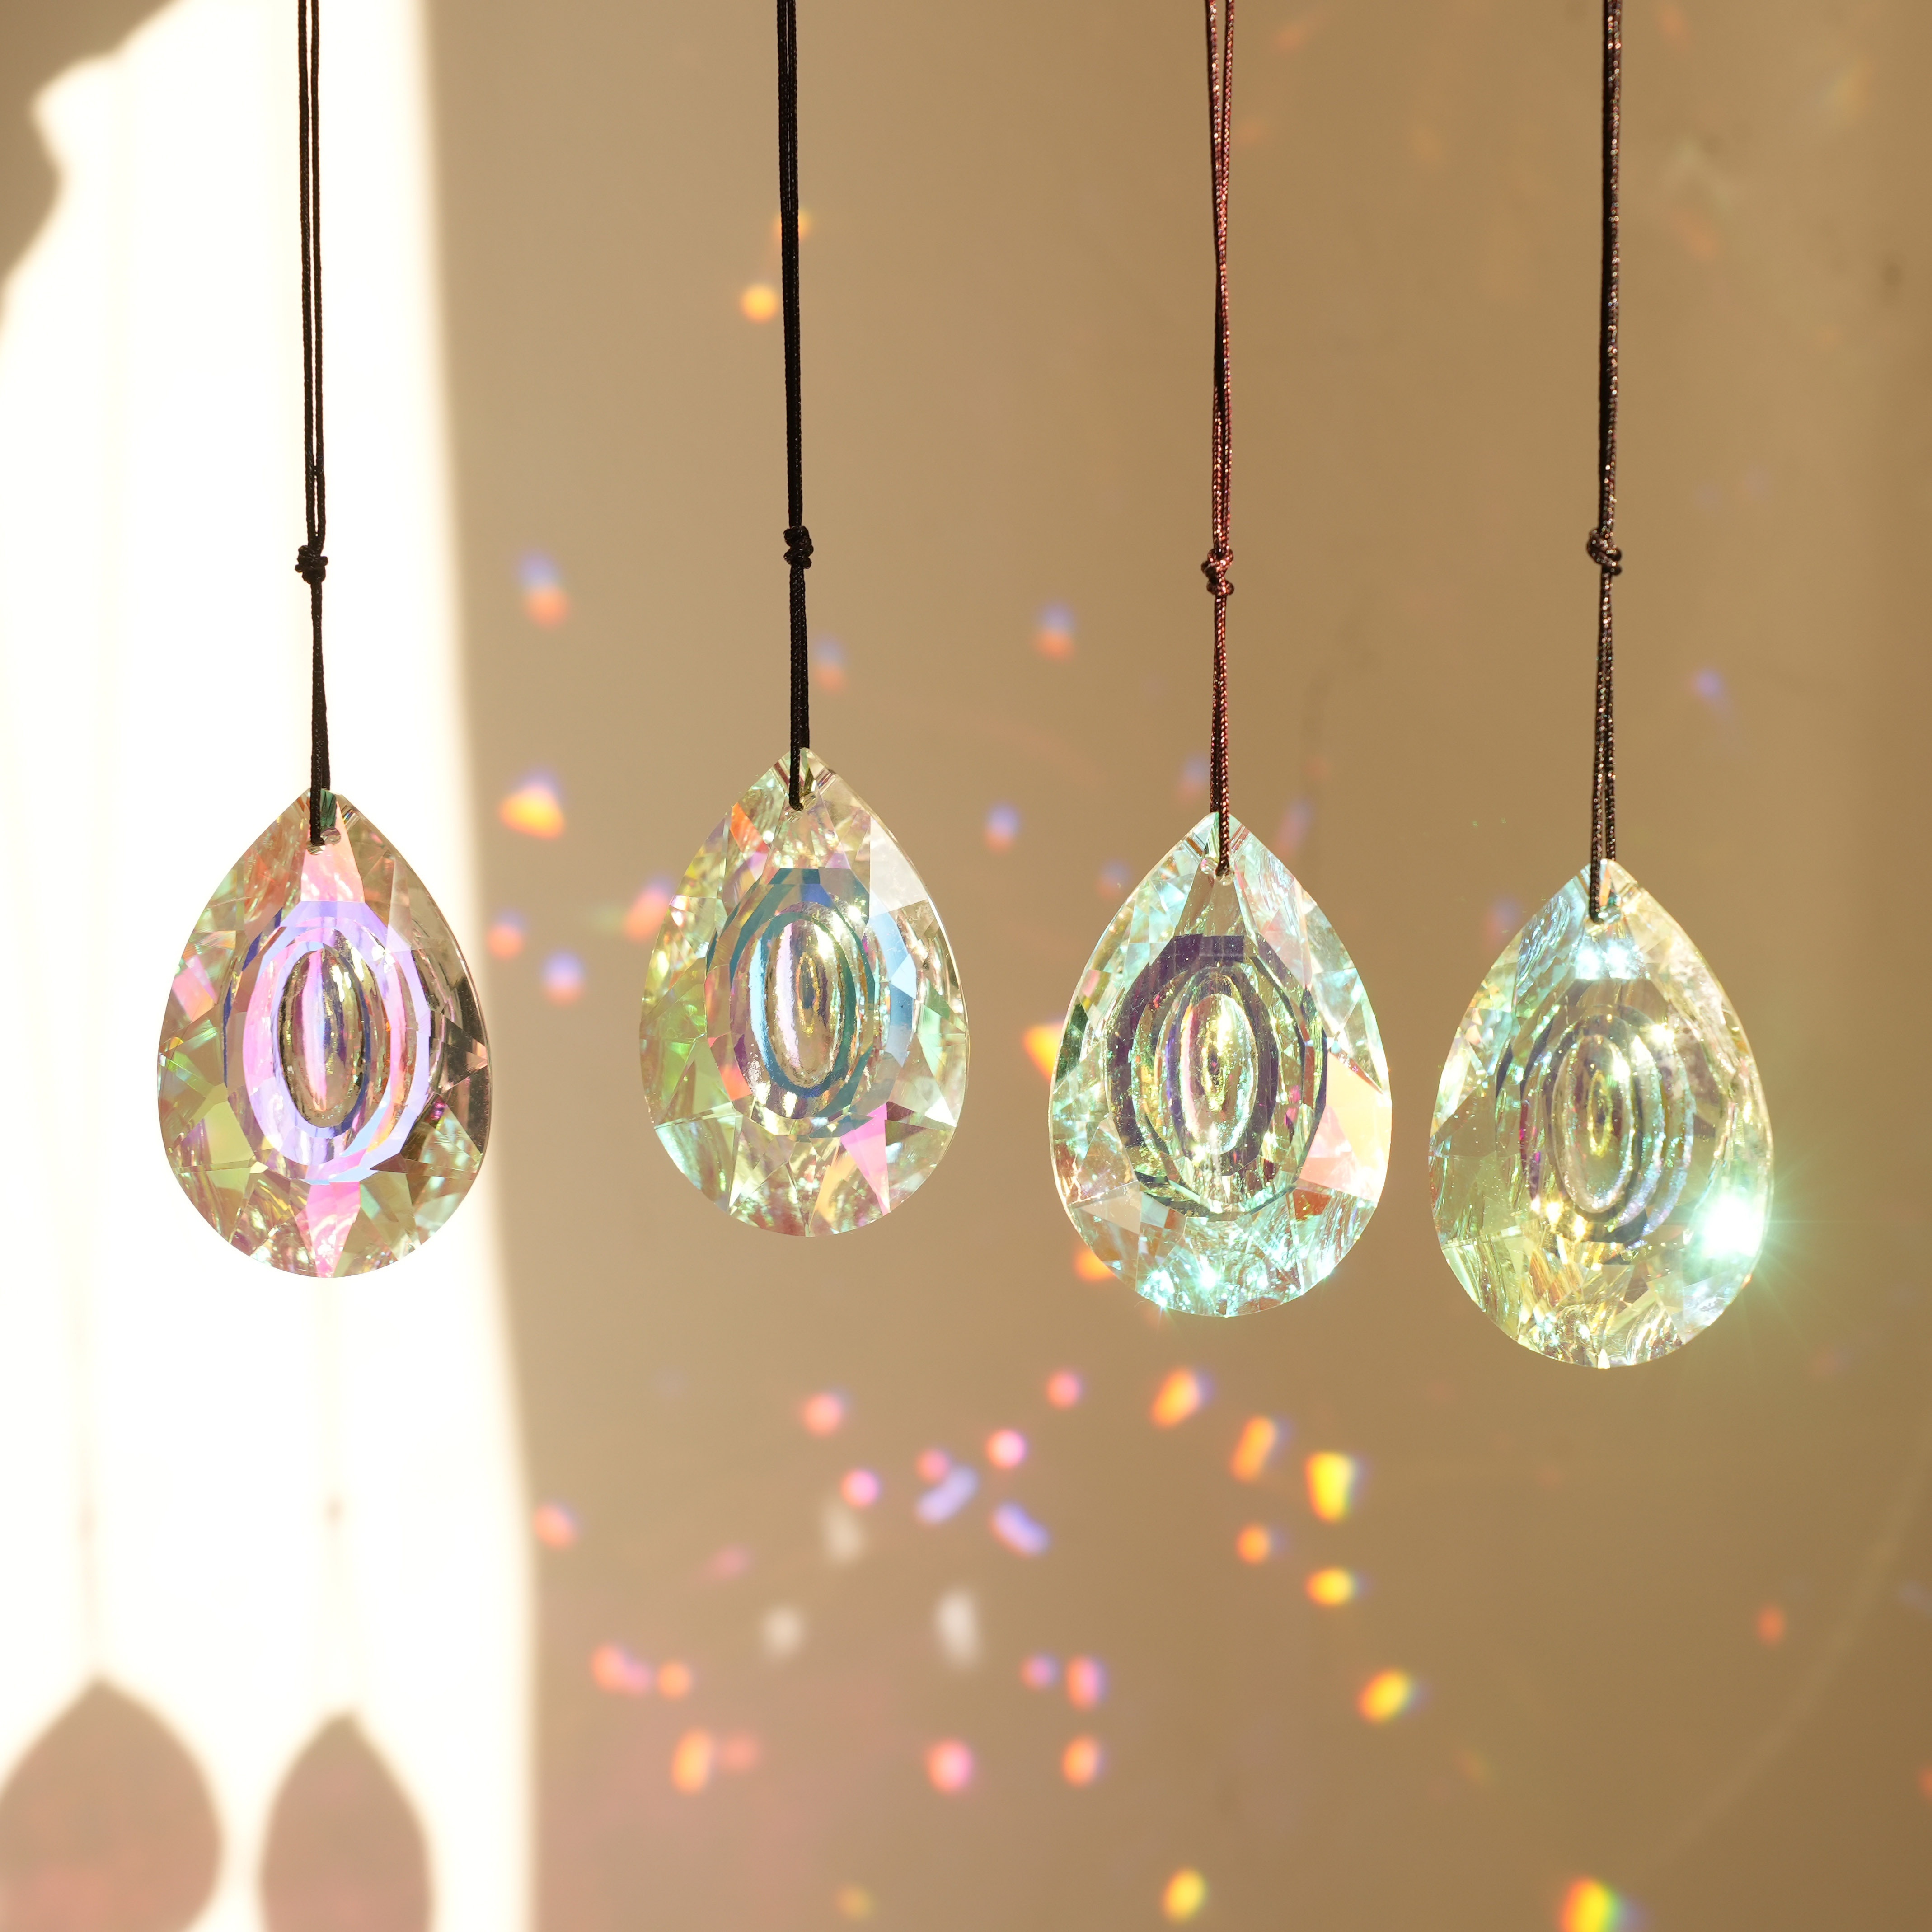 2 Stücke, Kristallprismen Sonnenfänger Ornamente Bunte